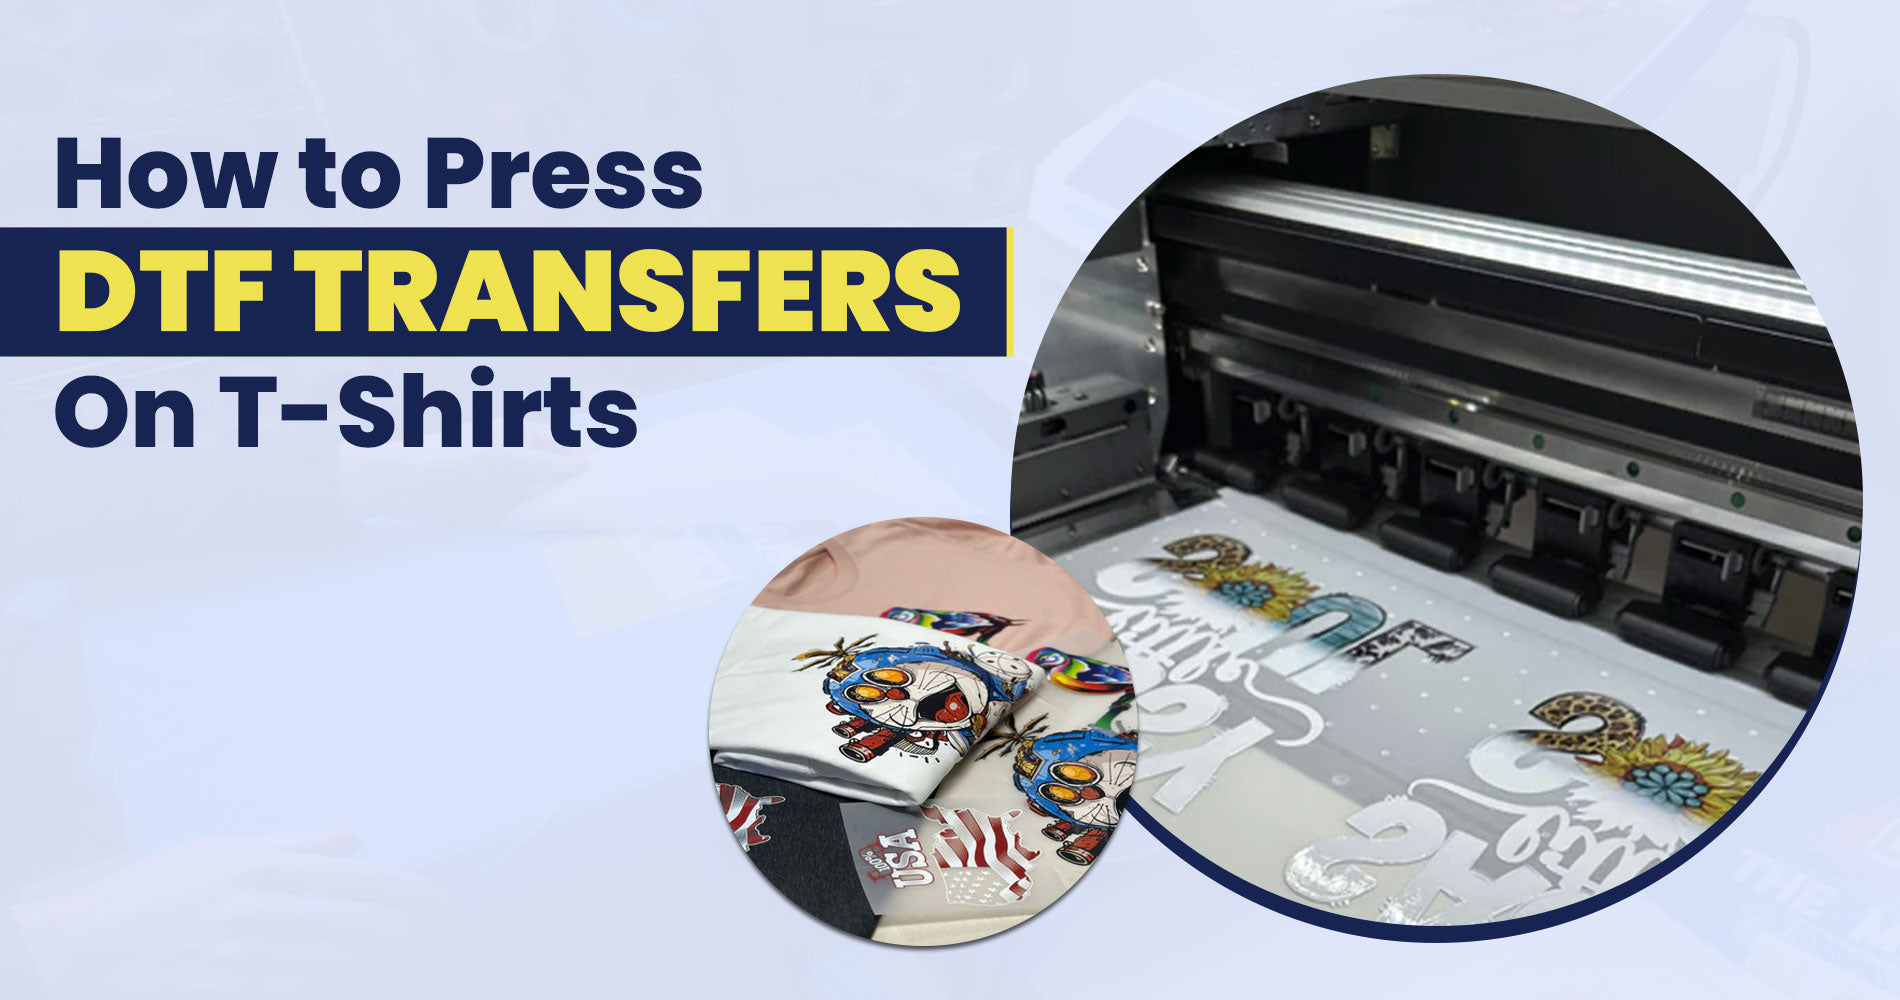 5 Ways to Print T-Shirts with a Heat Press